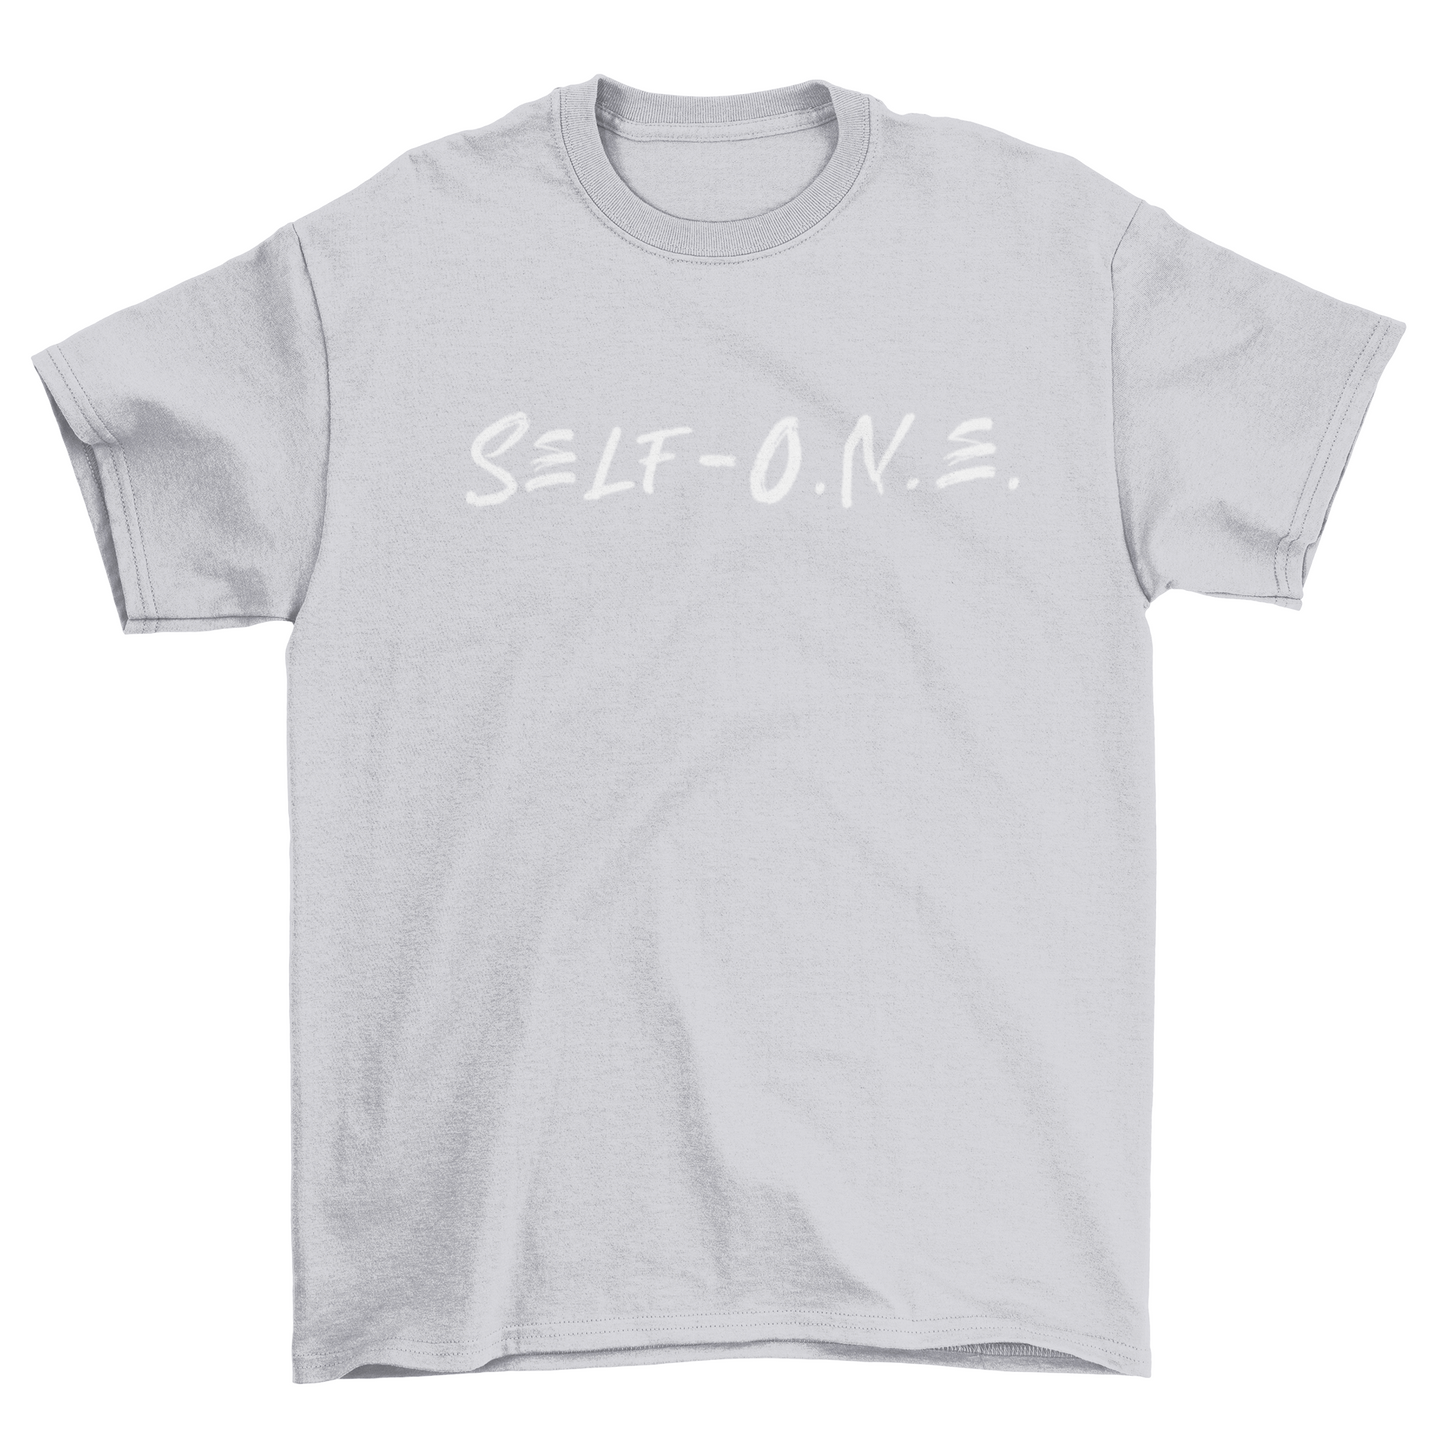 Self-O.N.E. shirt